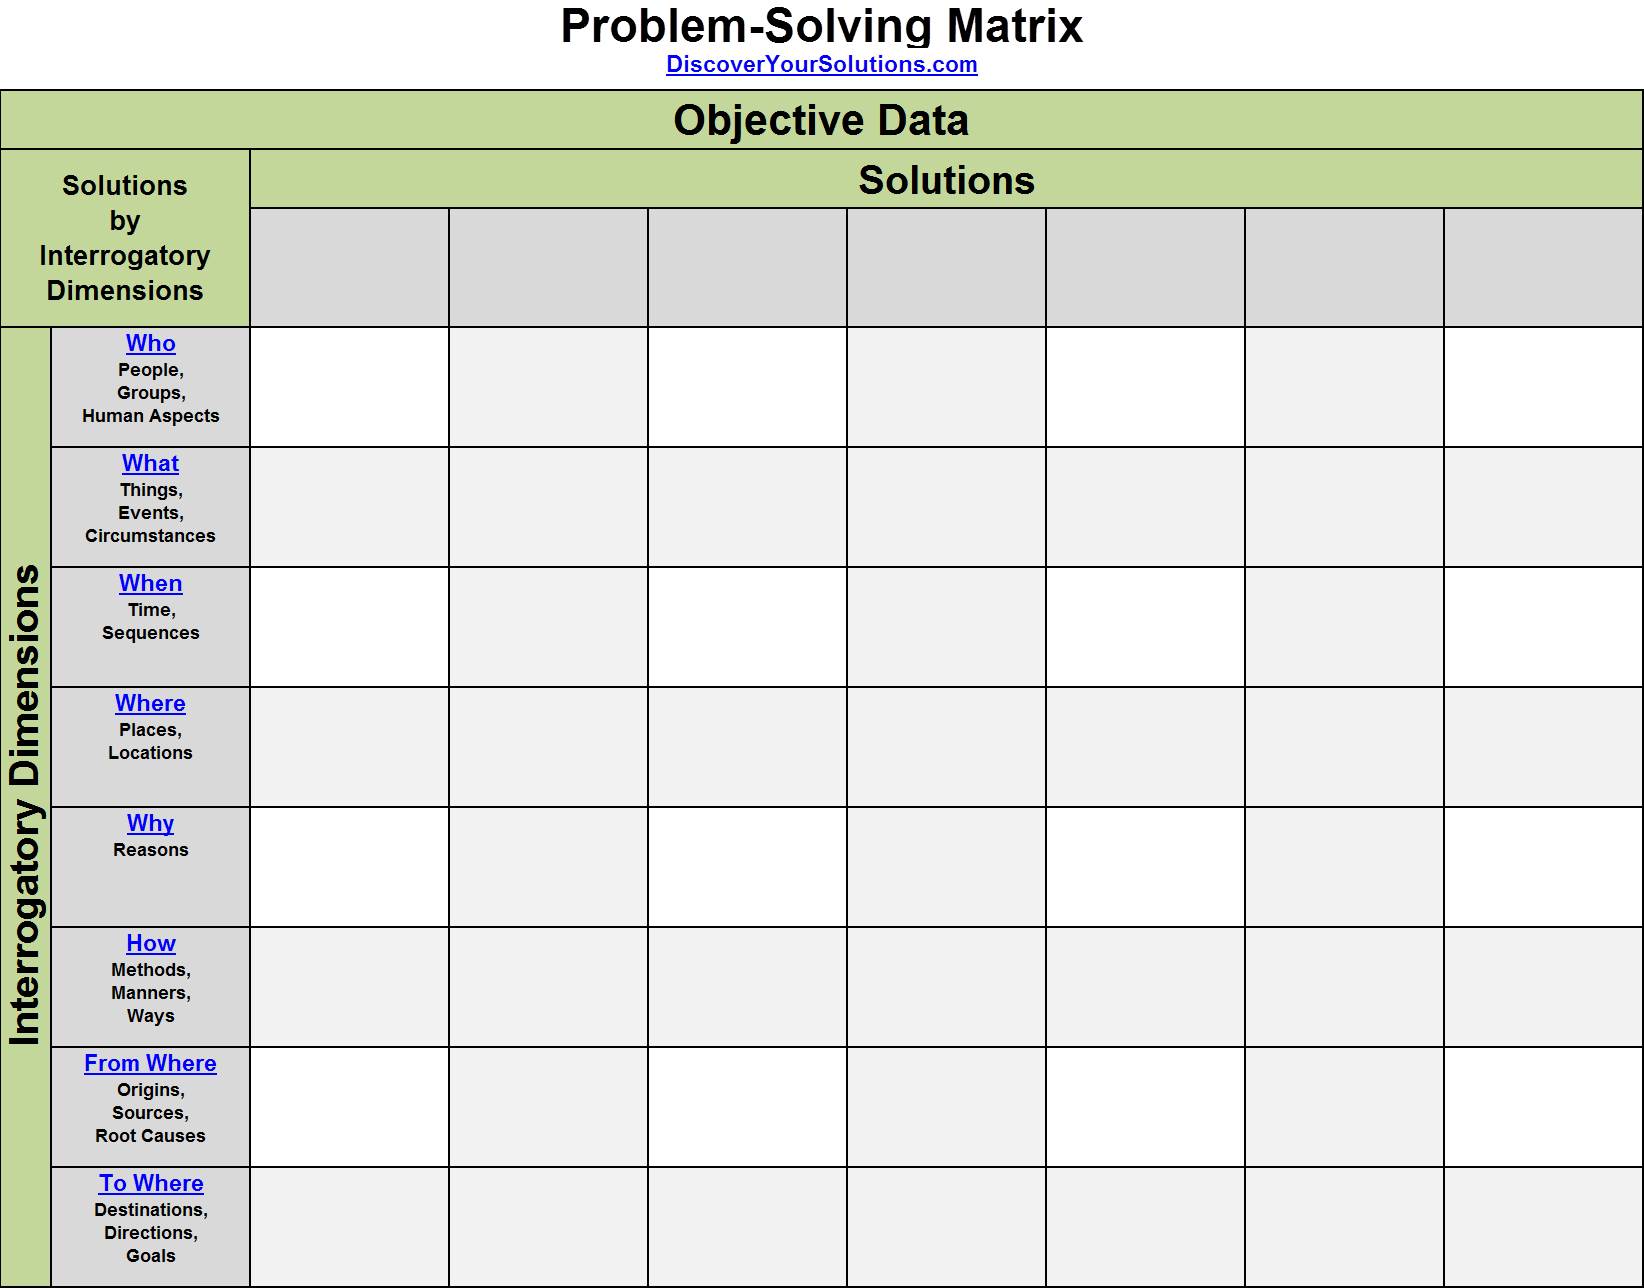 Problem-Solving Matrix - Objective Data / Solution